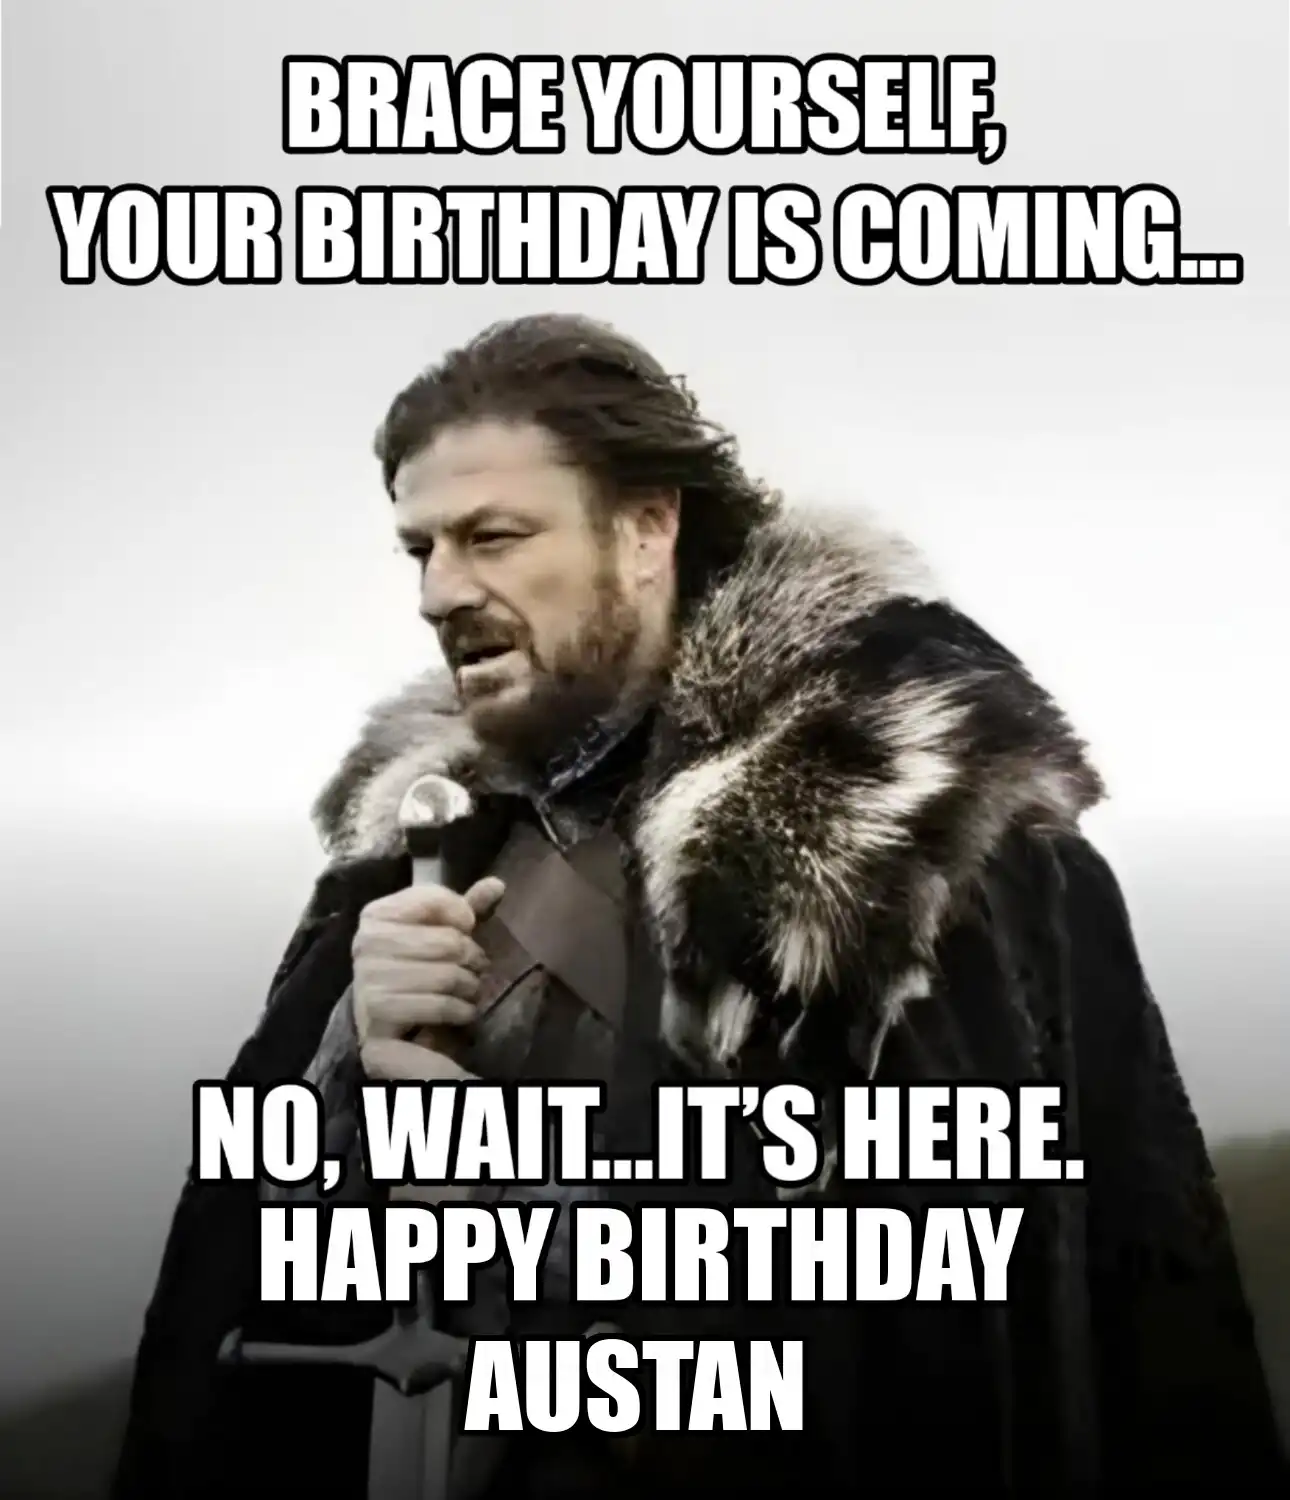 Happy Birthday Austan Brace Yourself Your Birthday Is Coming Meme